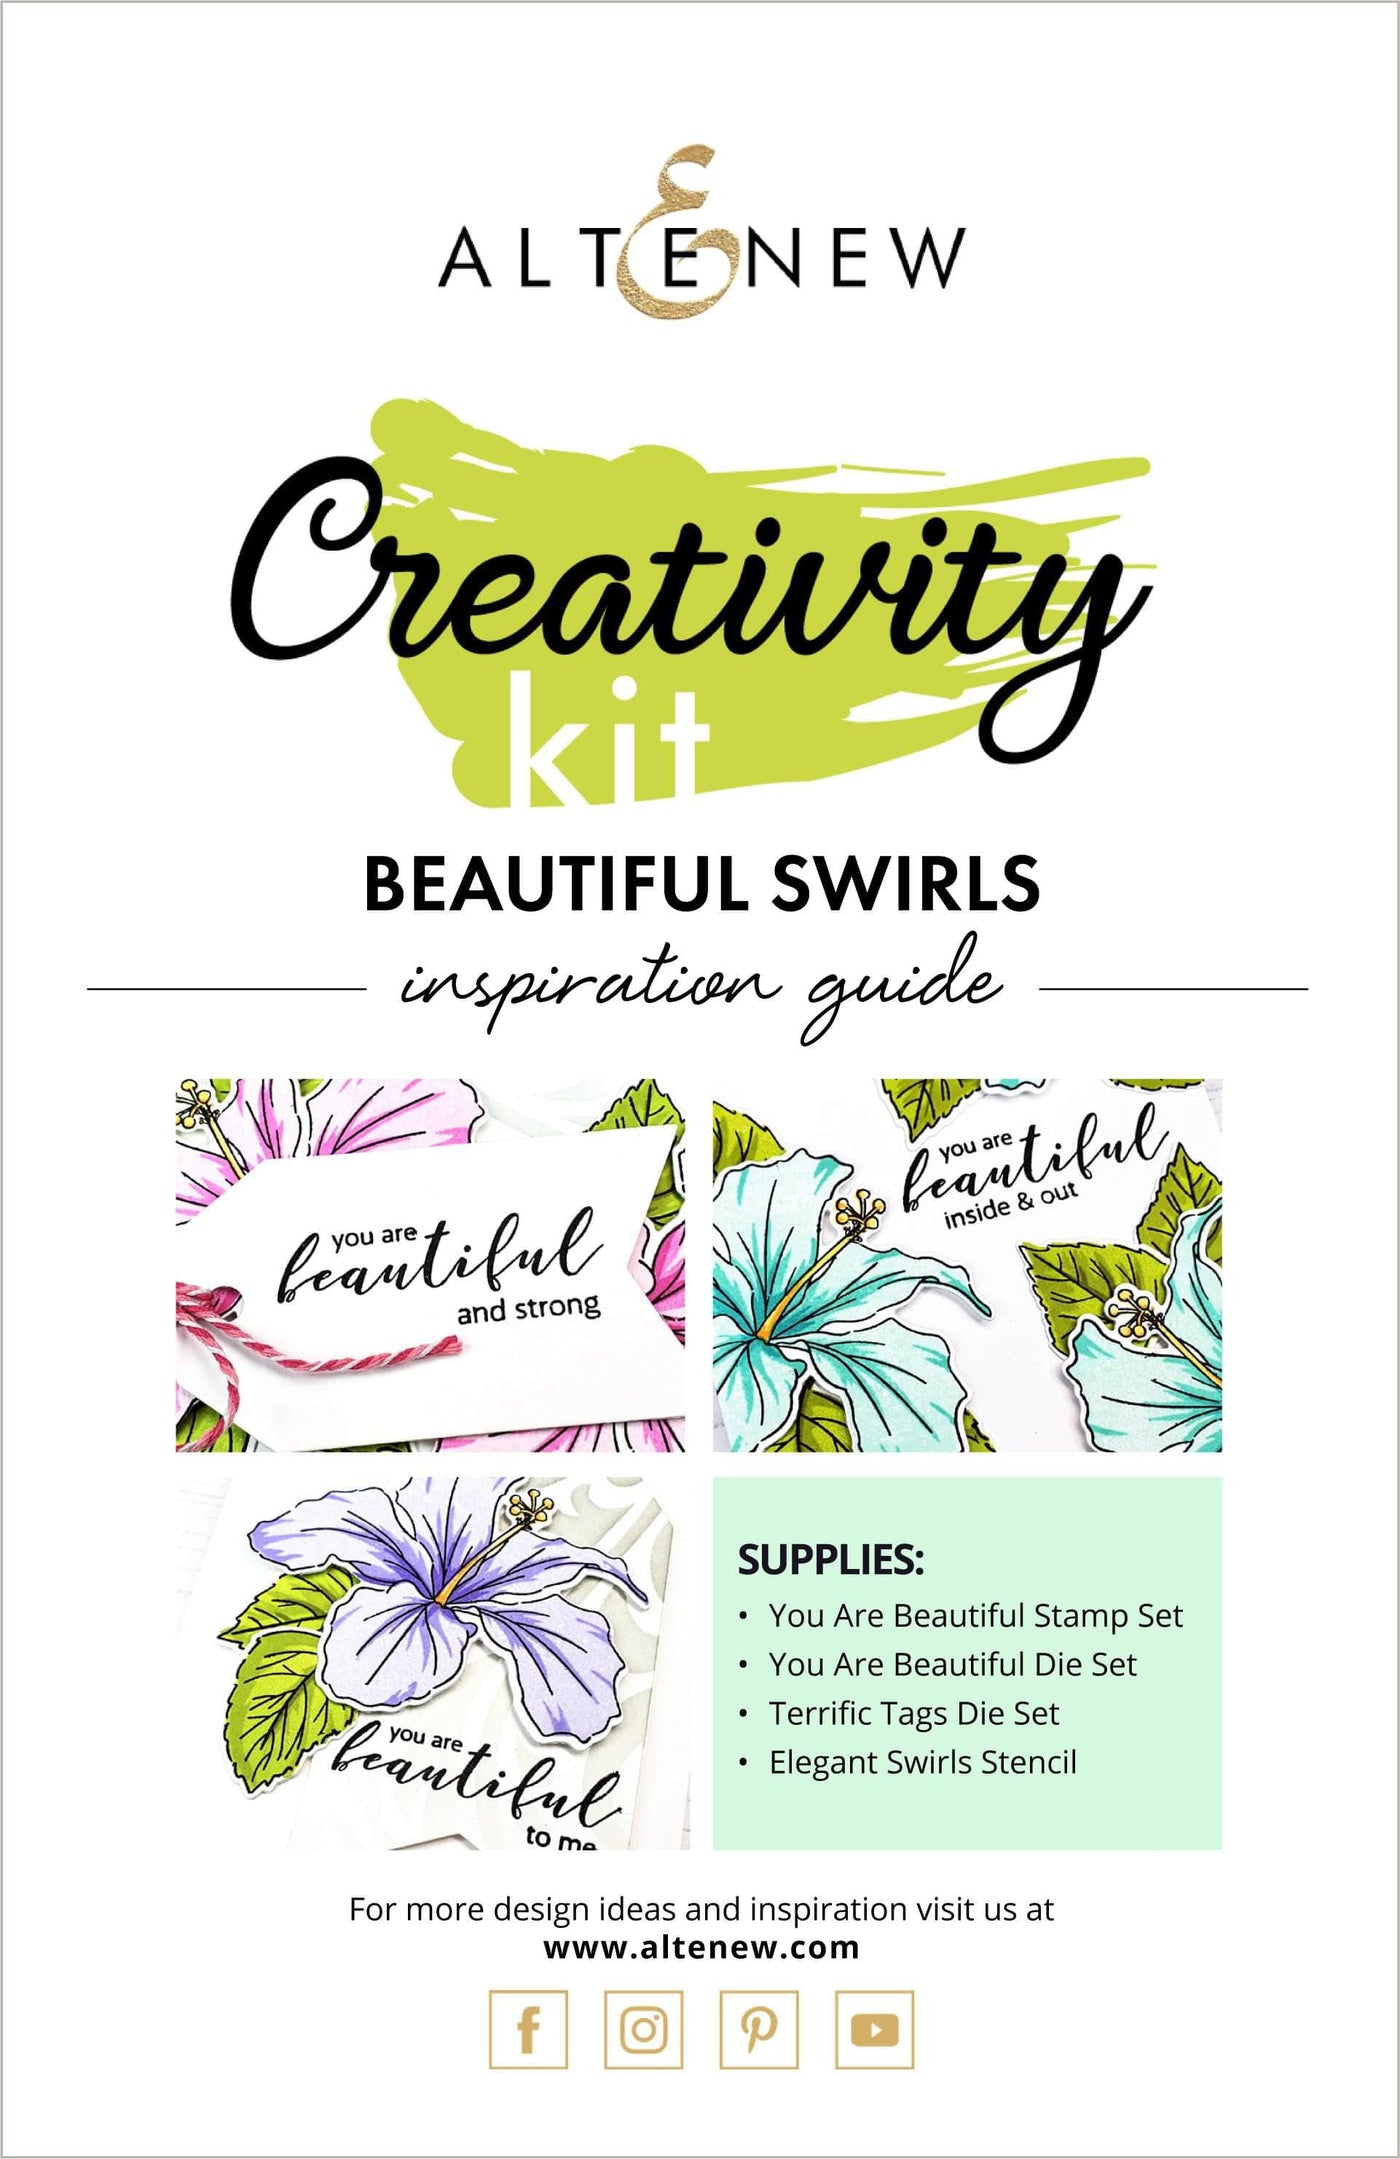 Printed Media Beautiful Swirls Creativity Cardmaking Kit Inspiration Guide